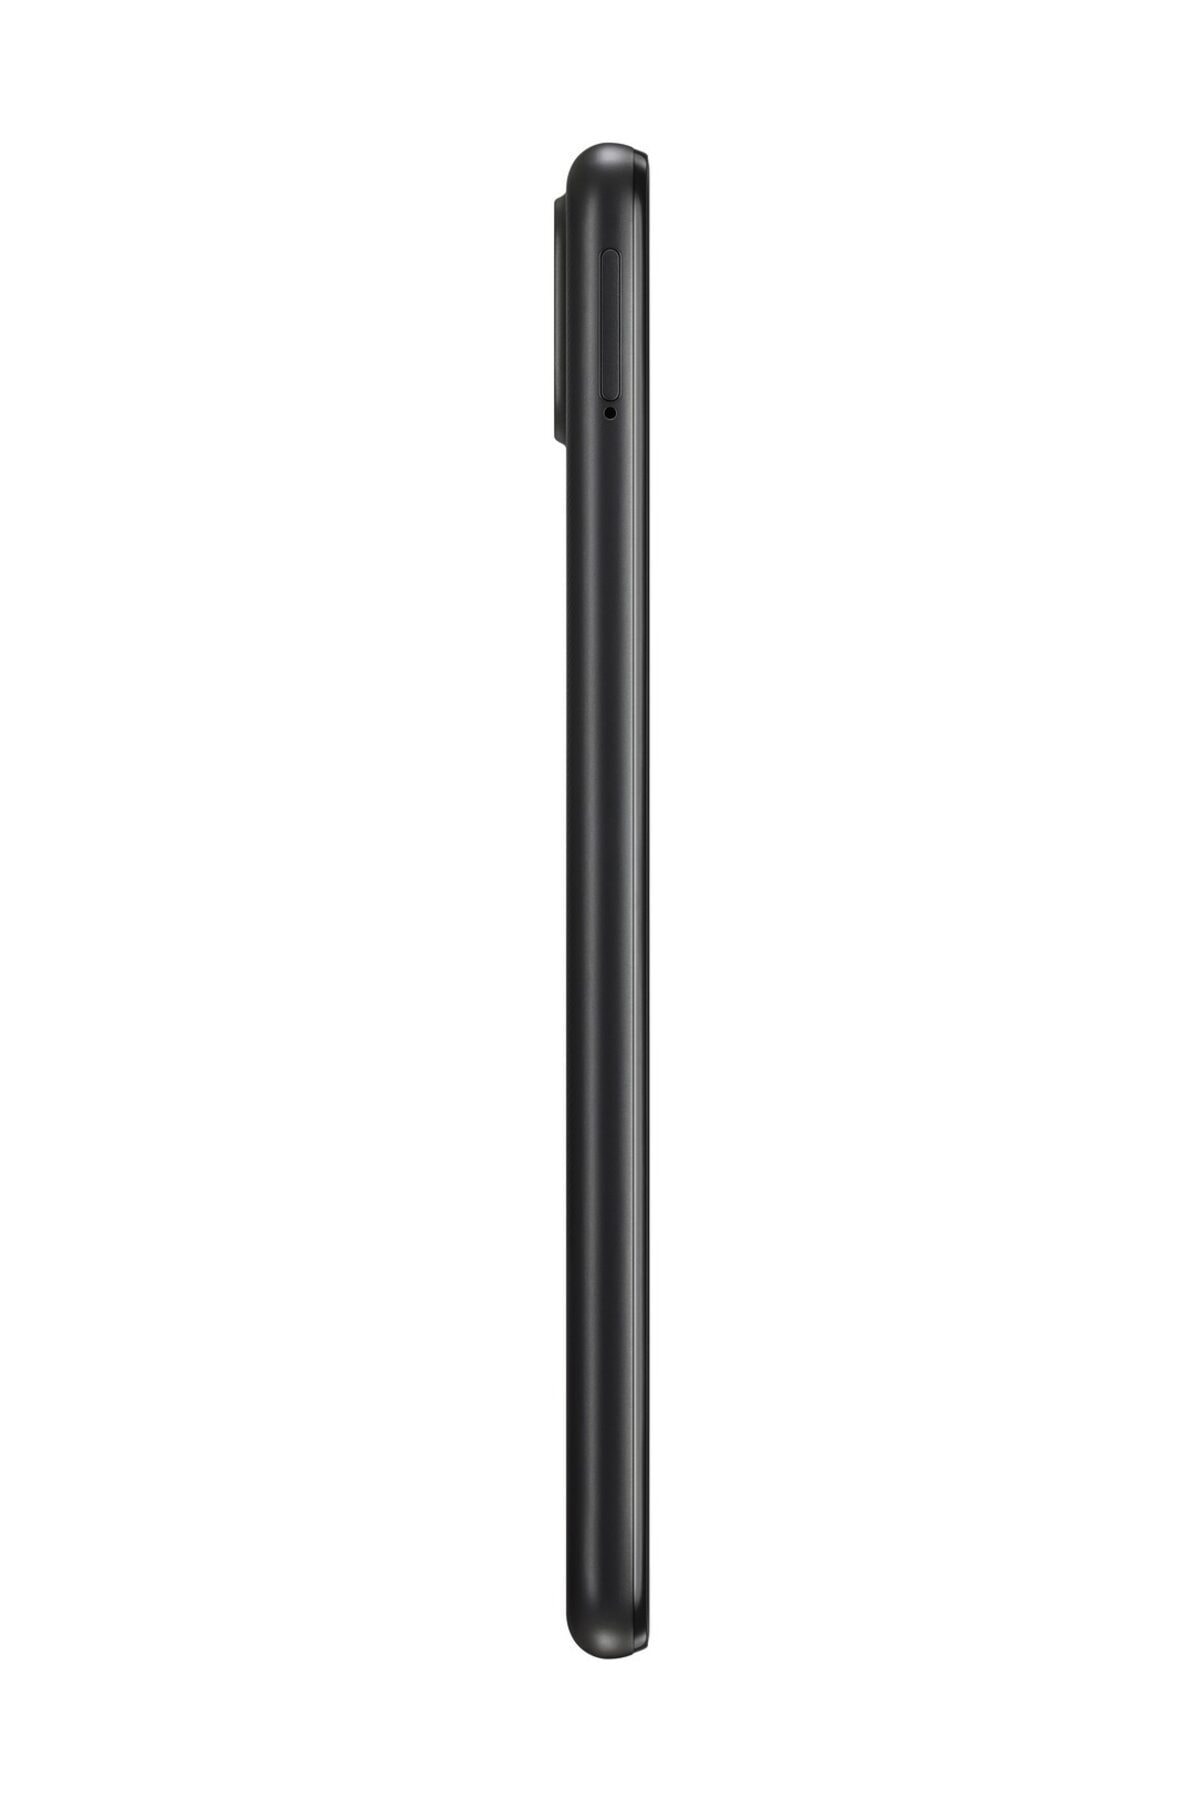 Samsung Galaxy A12 64GB Siyah Cep Telefonu (Samsung Türkiye Garantili) TH9548